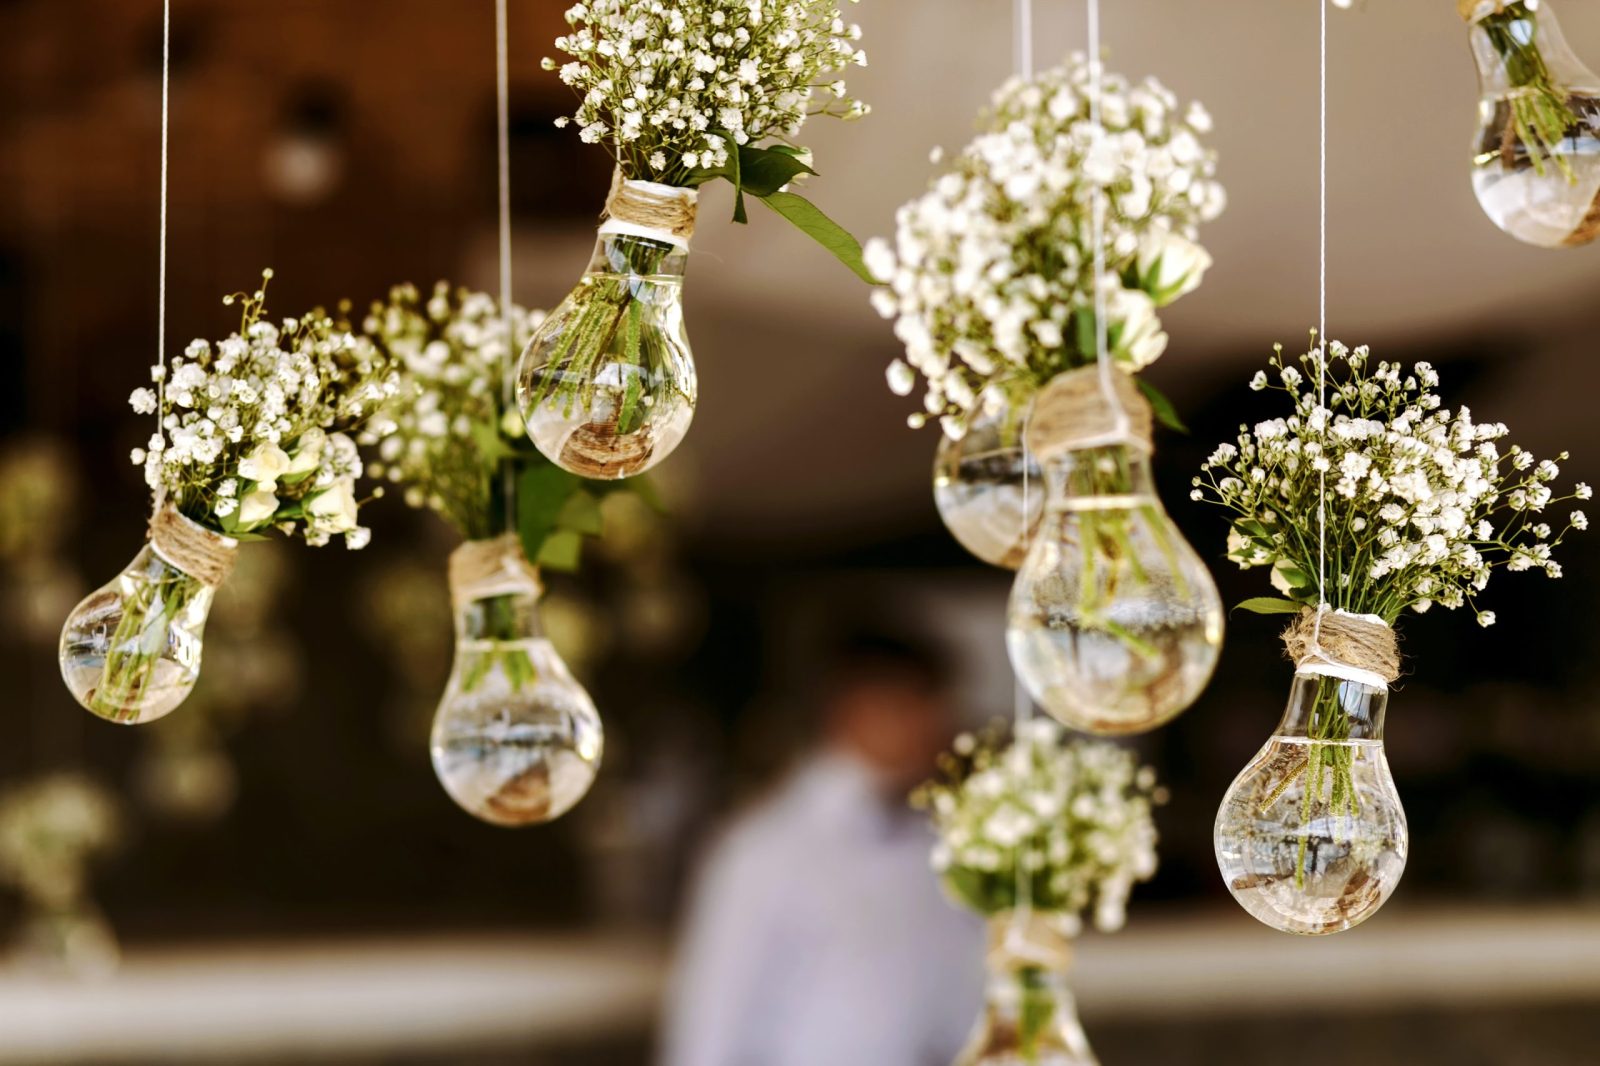 Wedding flower decorations in old lightbulbs